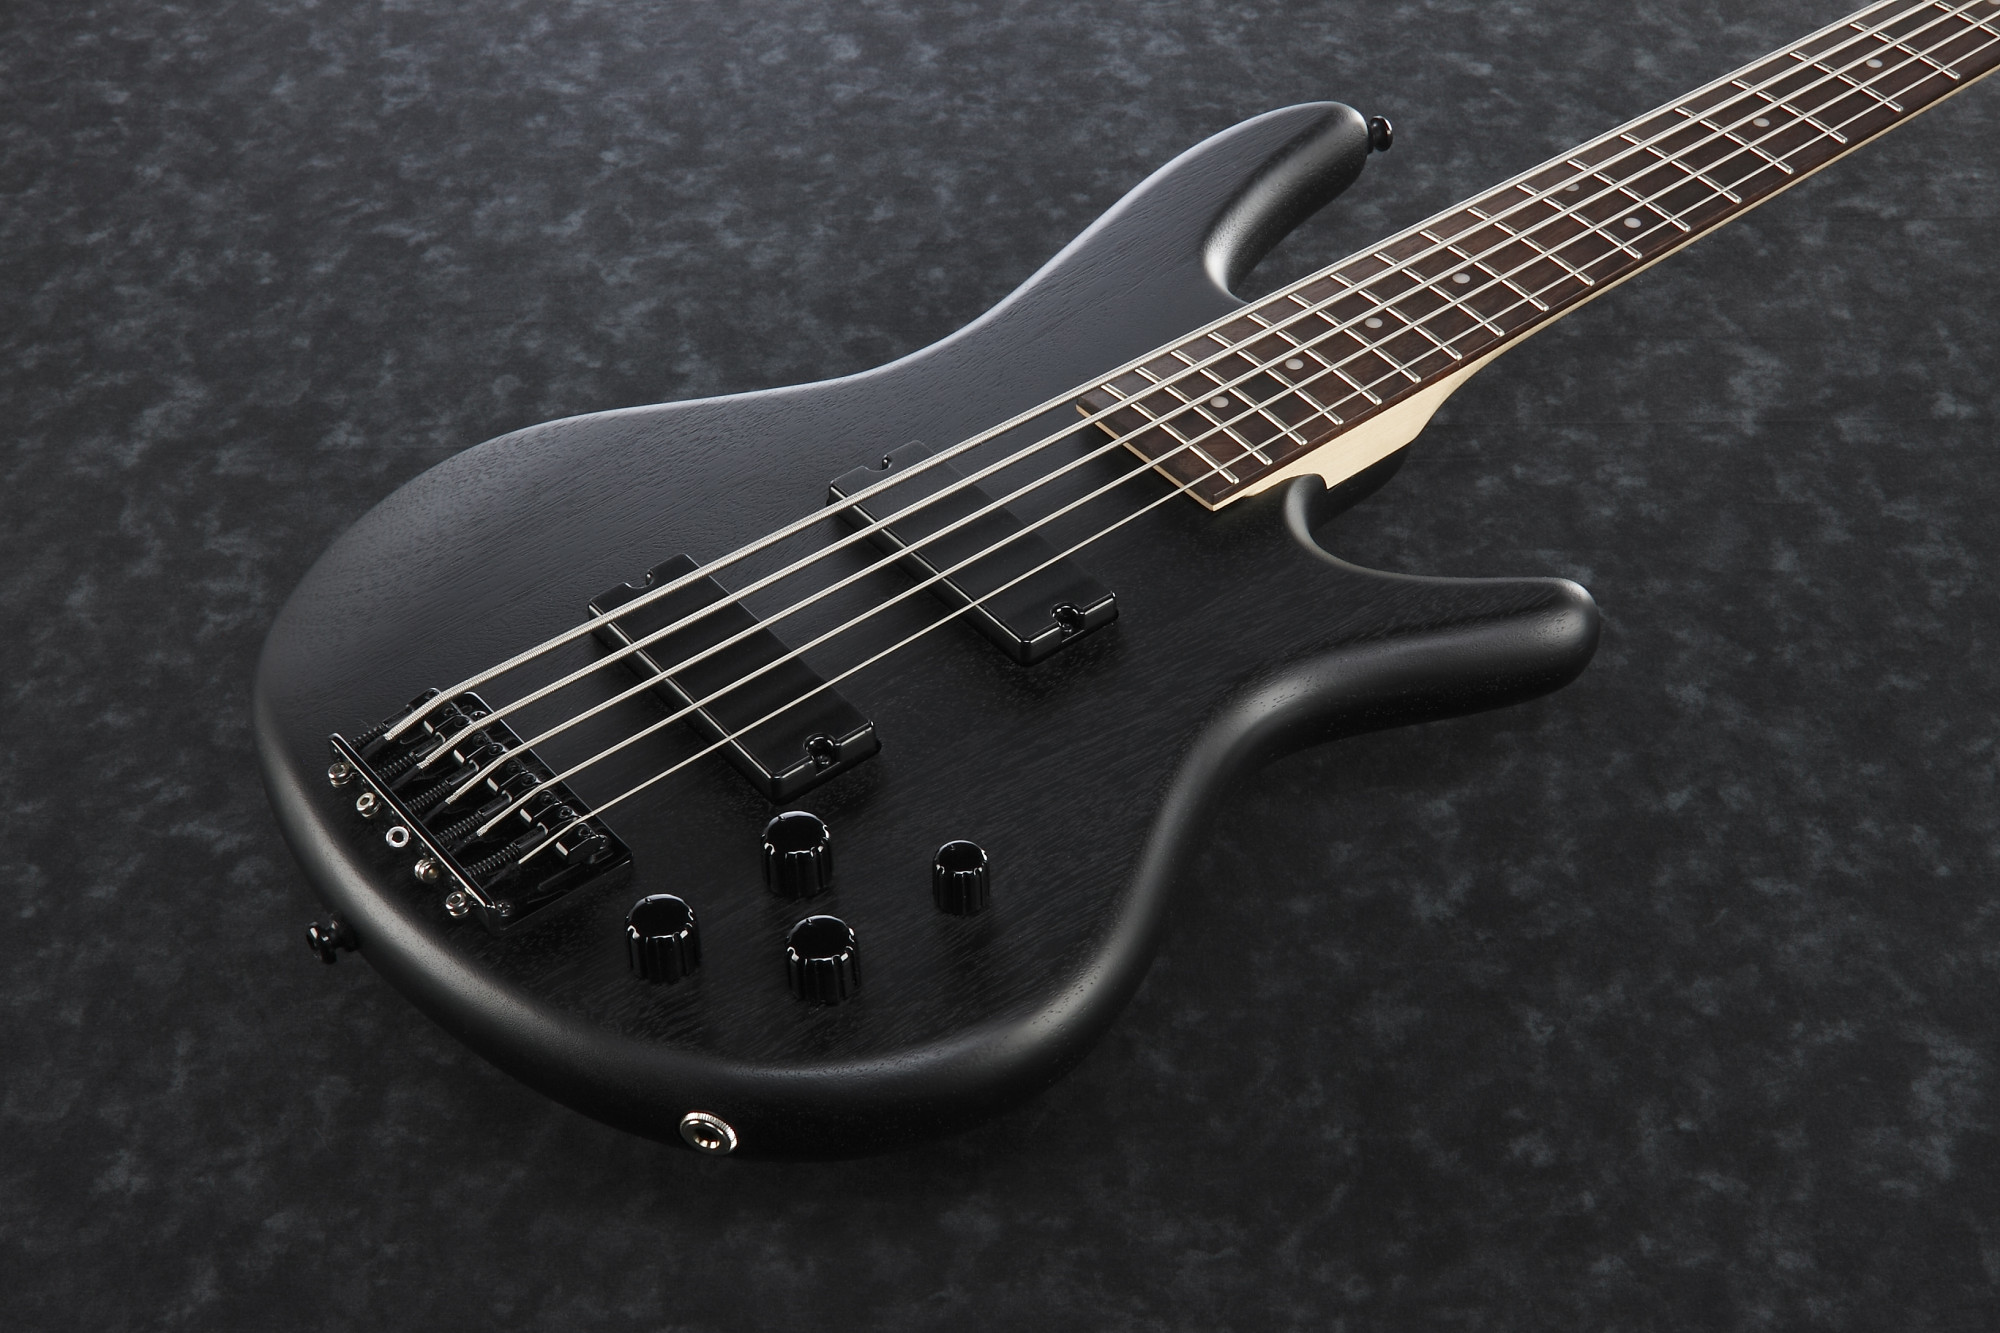 Ibanez GSR205B-WK E-Bass